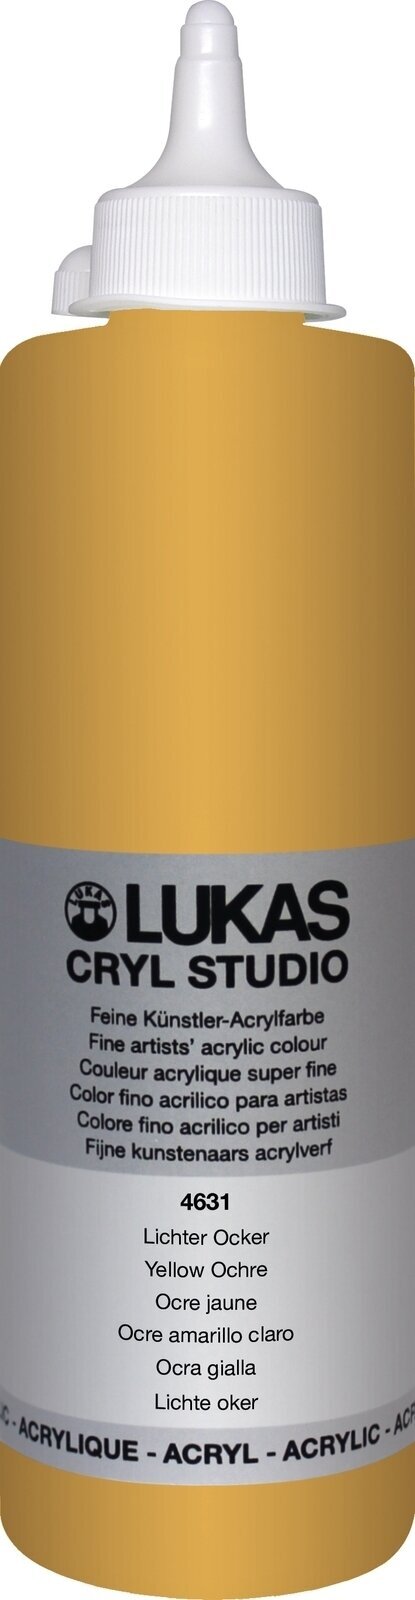 Acrylfarbe Lukas Cryl Studio Acrylic Paint Plastic Bottle Acrylfarbe Yellow Ochre 500 ml 1 Stck